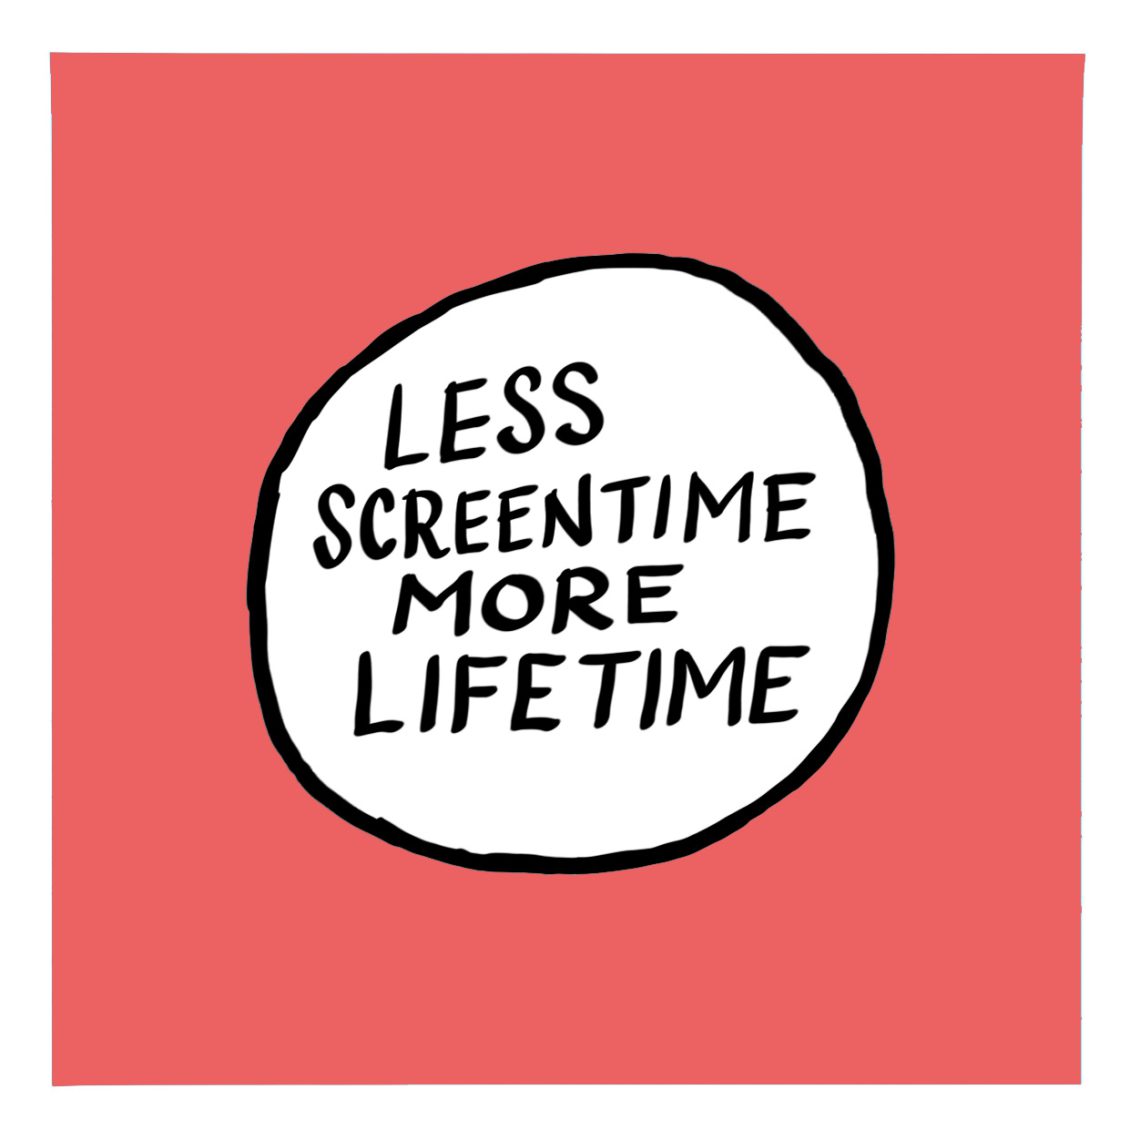 less screentime more lifetime